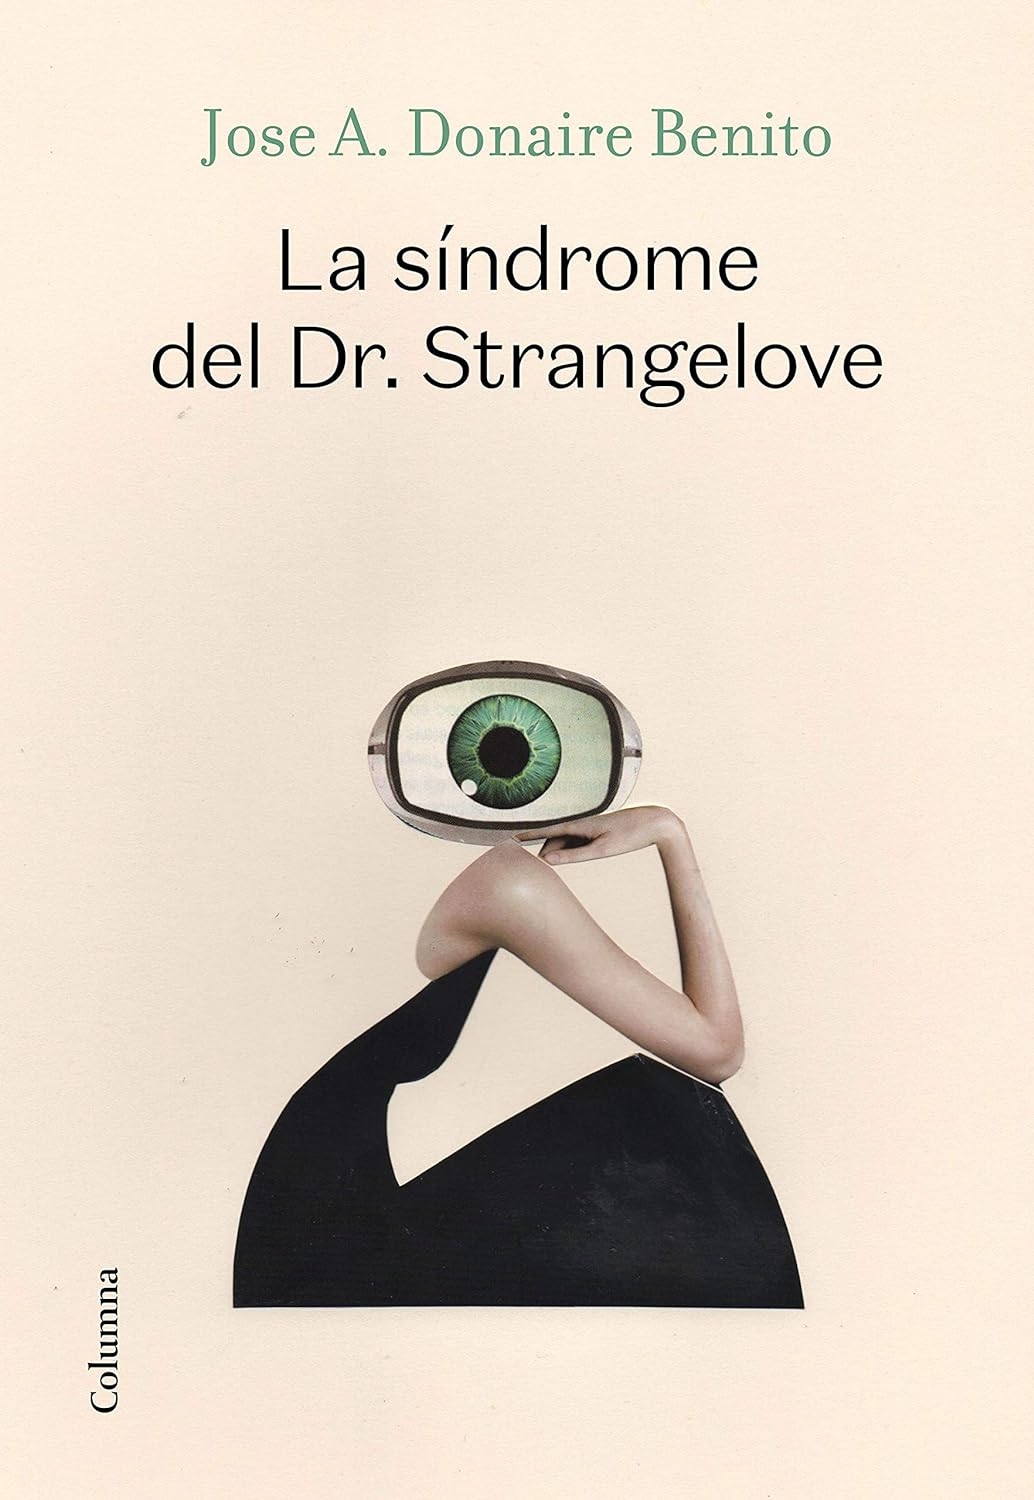 La síndrome del Dr. Strangelove gratis en epub